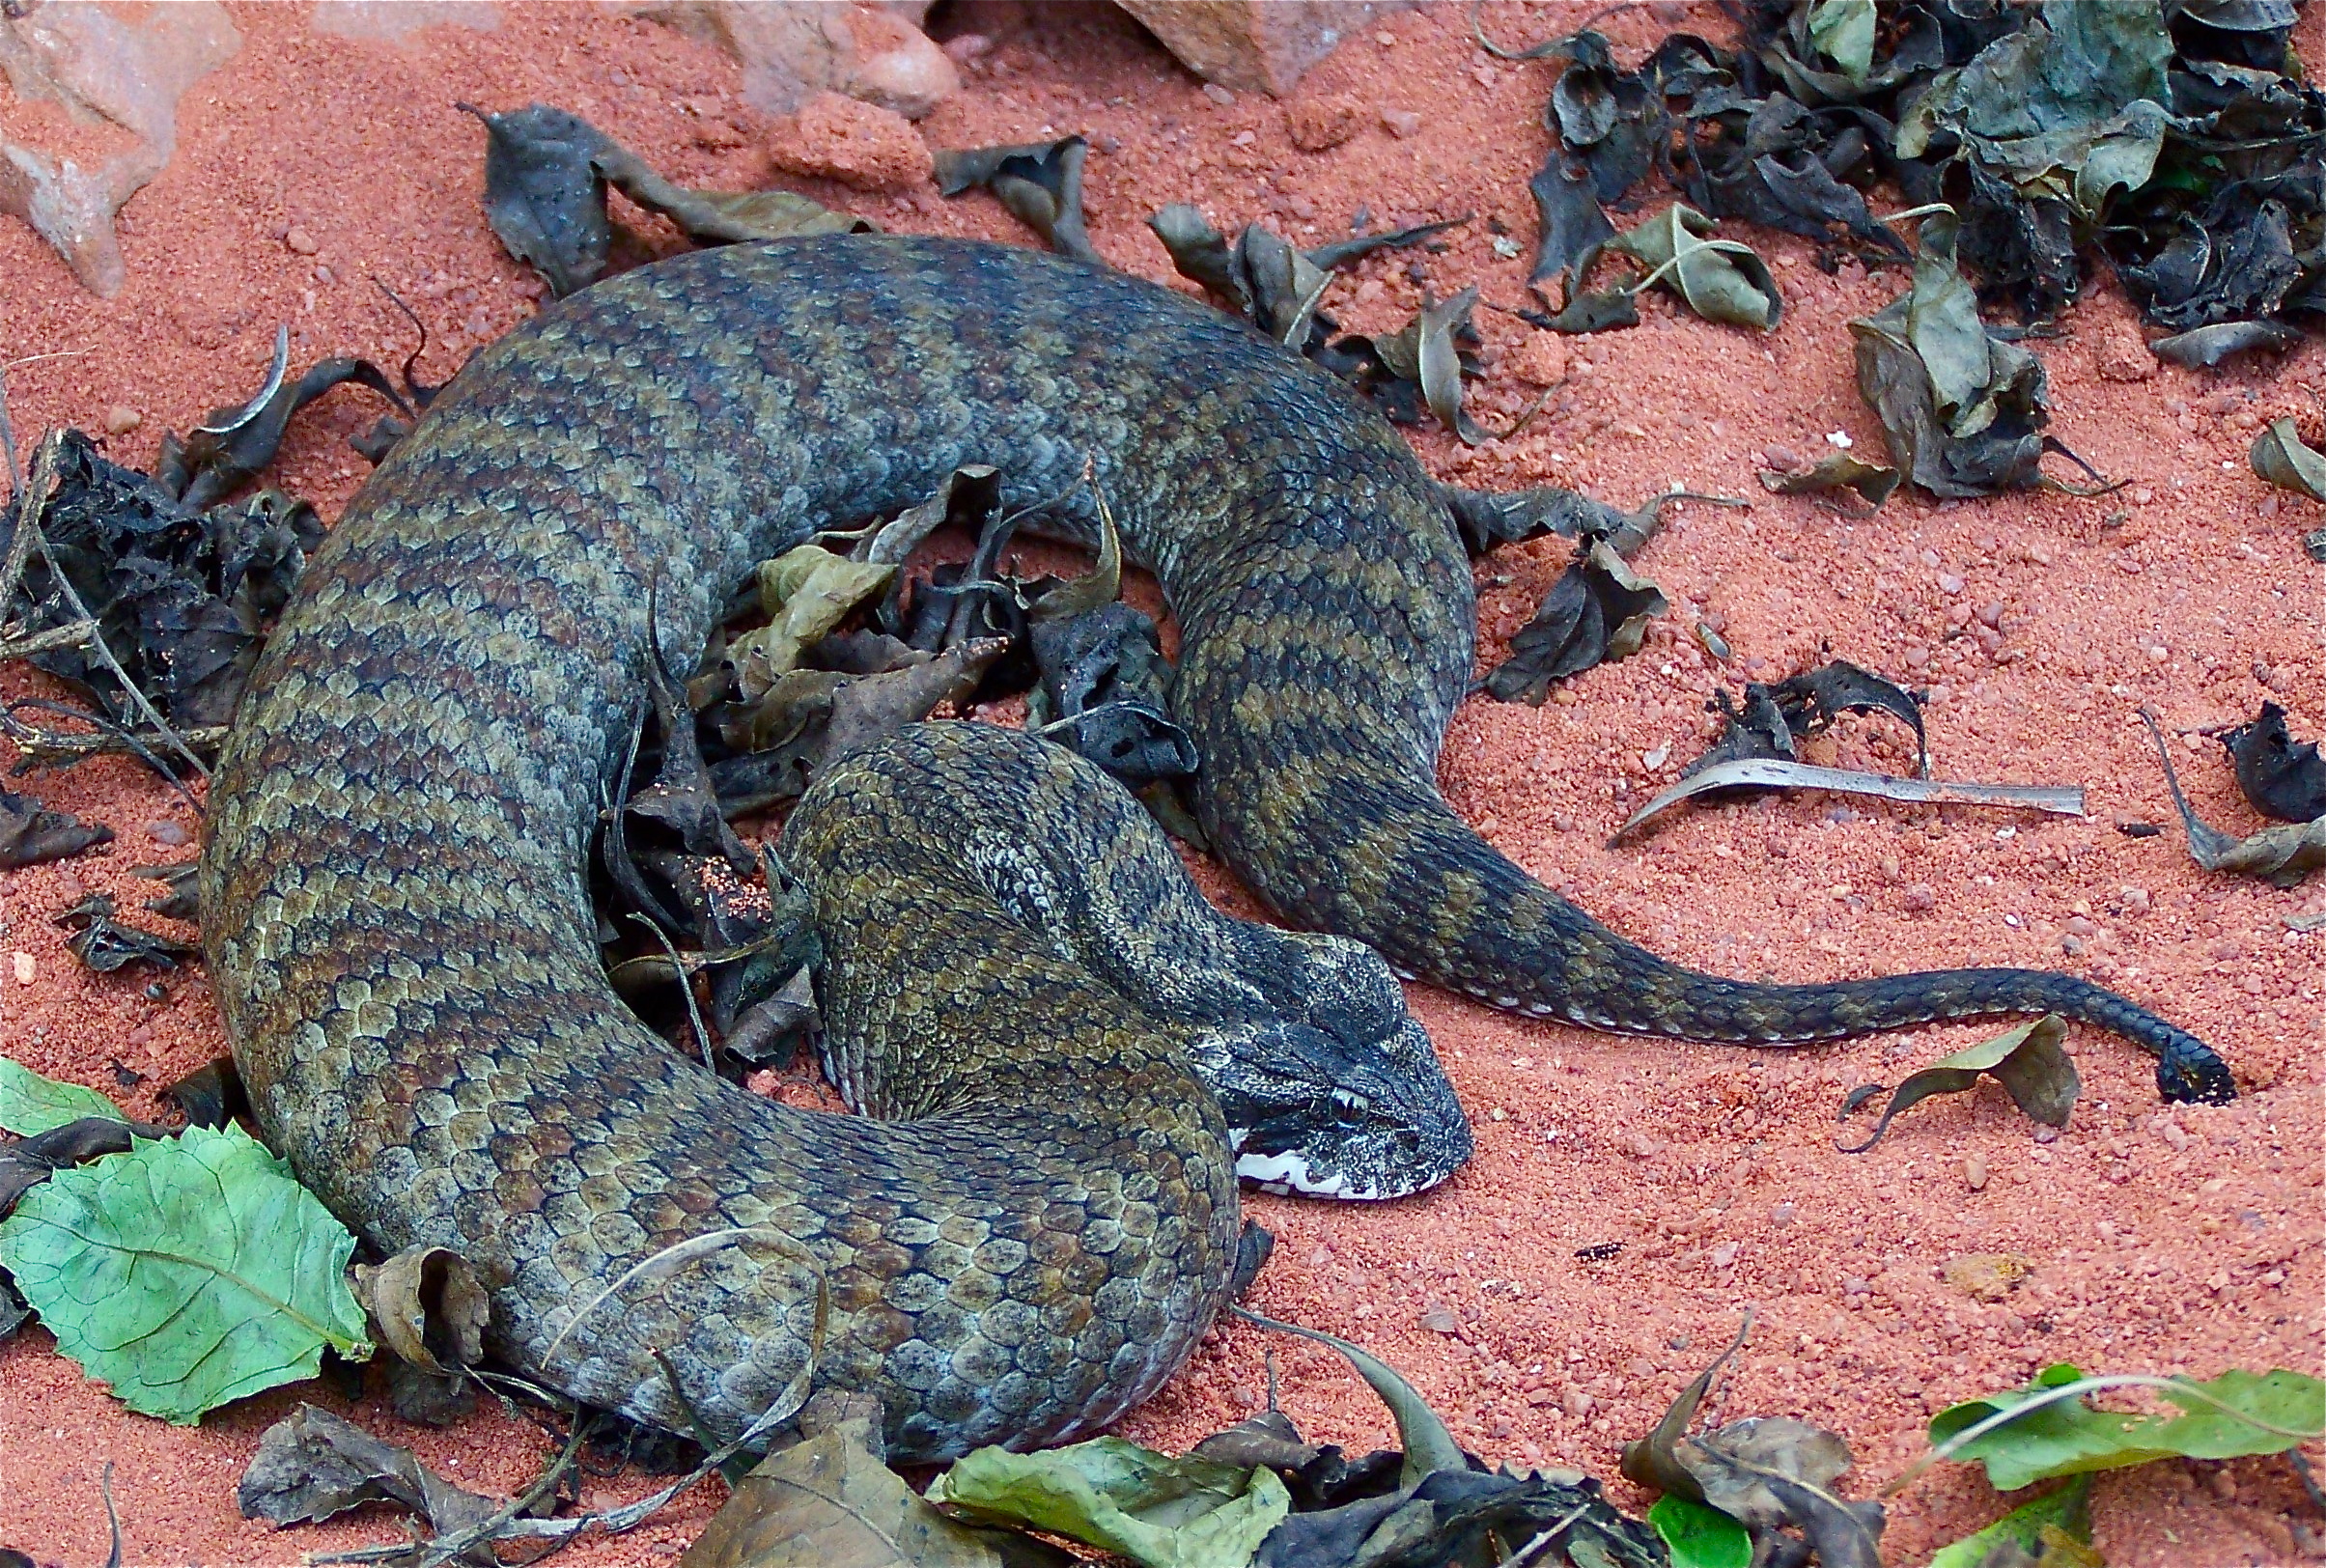 The Death Adder Eastern brown snakes Australia Dangerous Creature